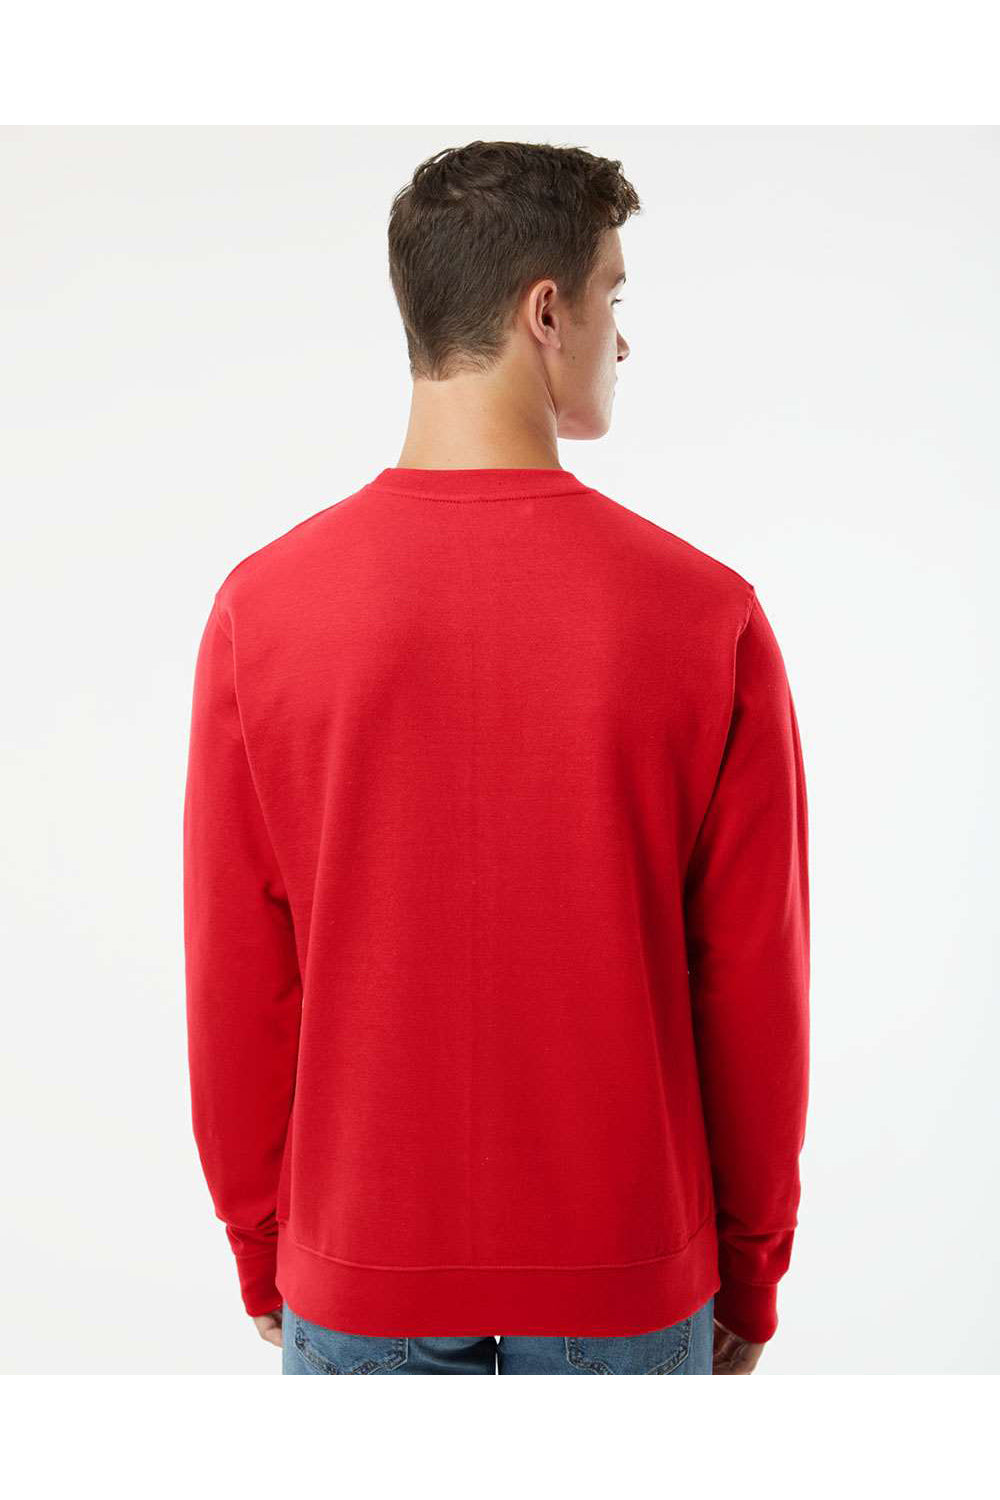 Independent Trading Co. SS3000 Mens Crewneck Sweatshirt Red Model Back